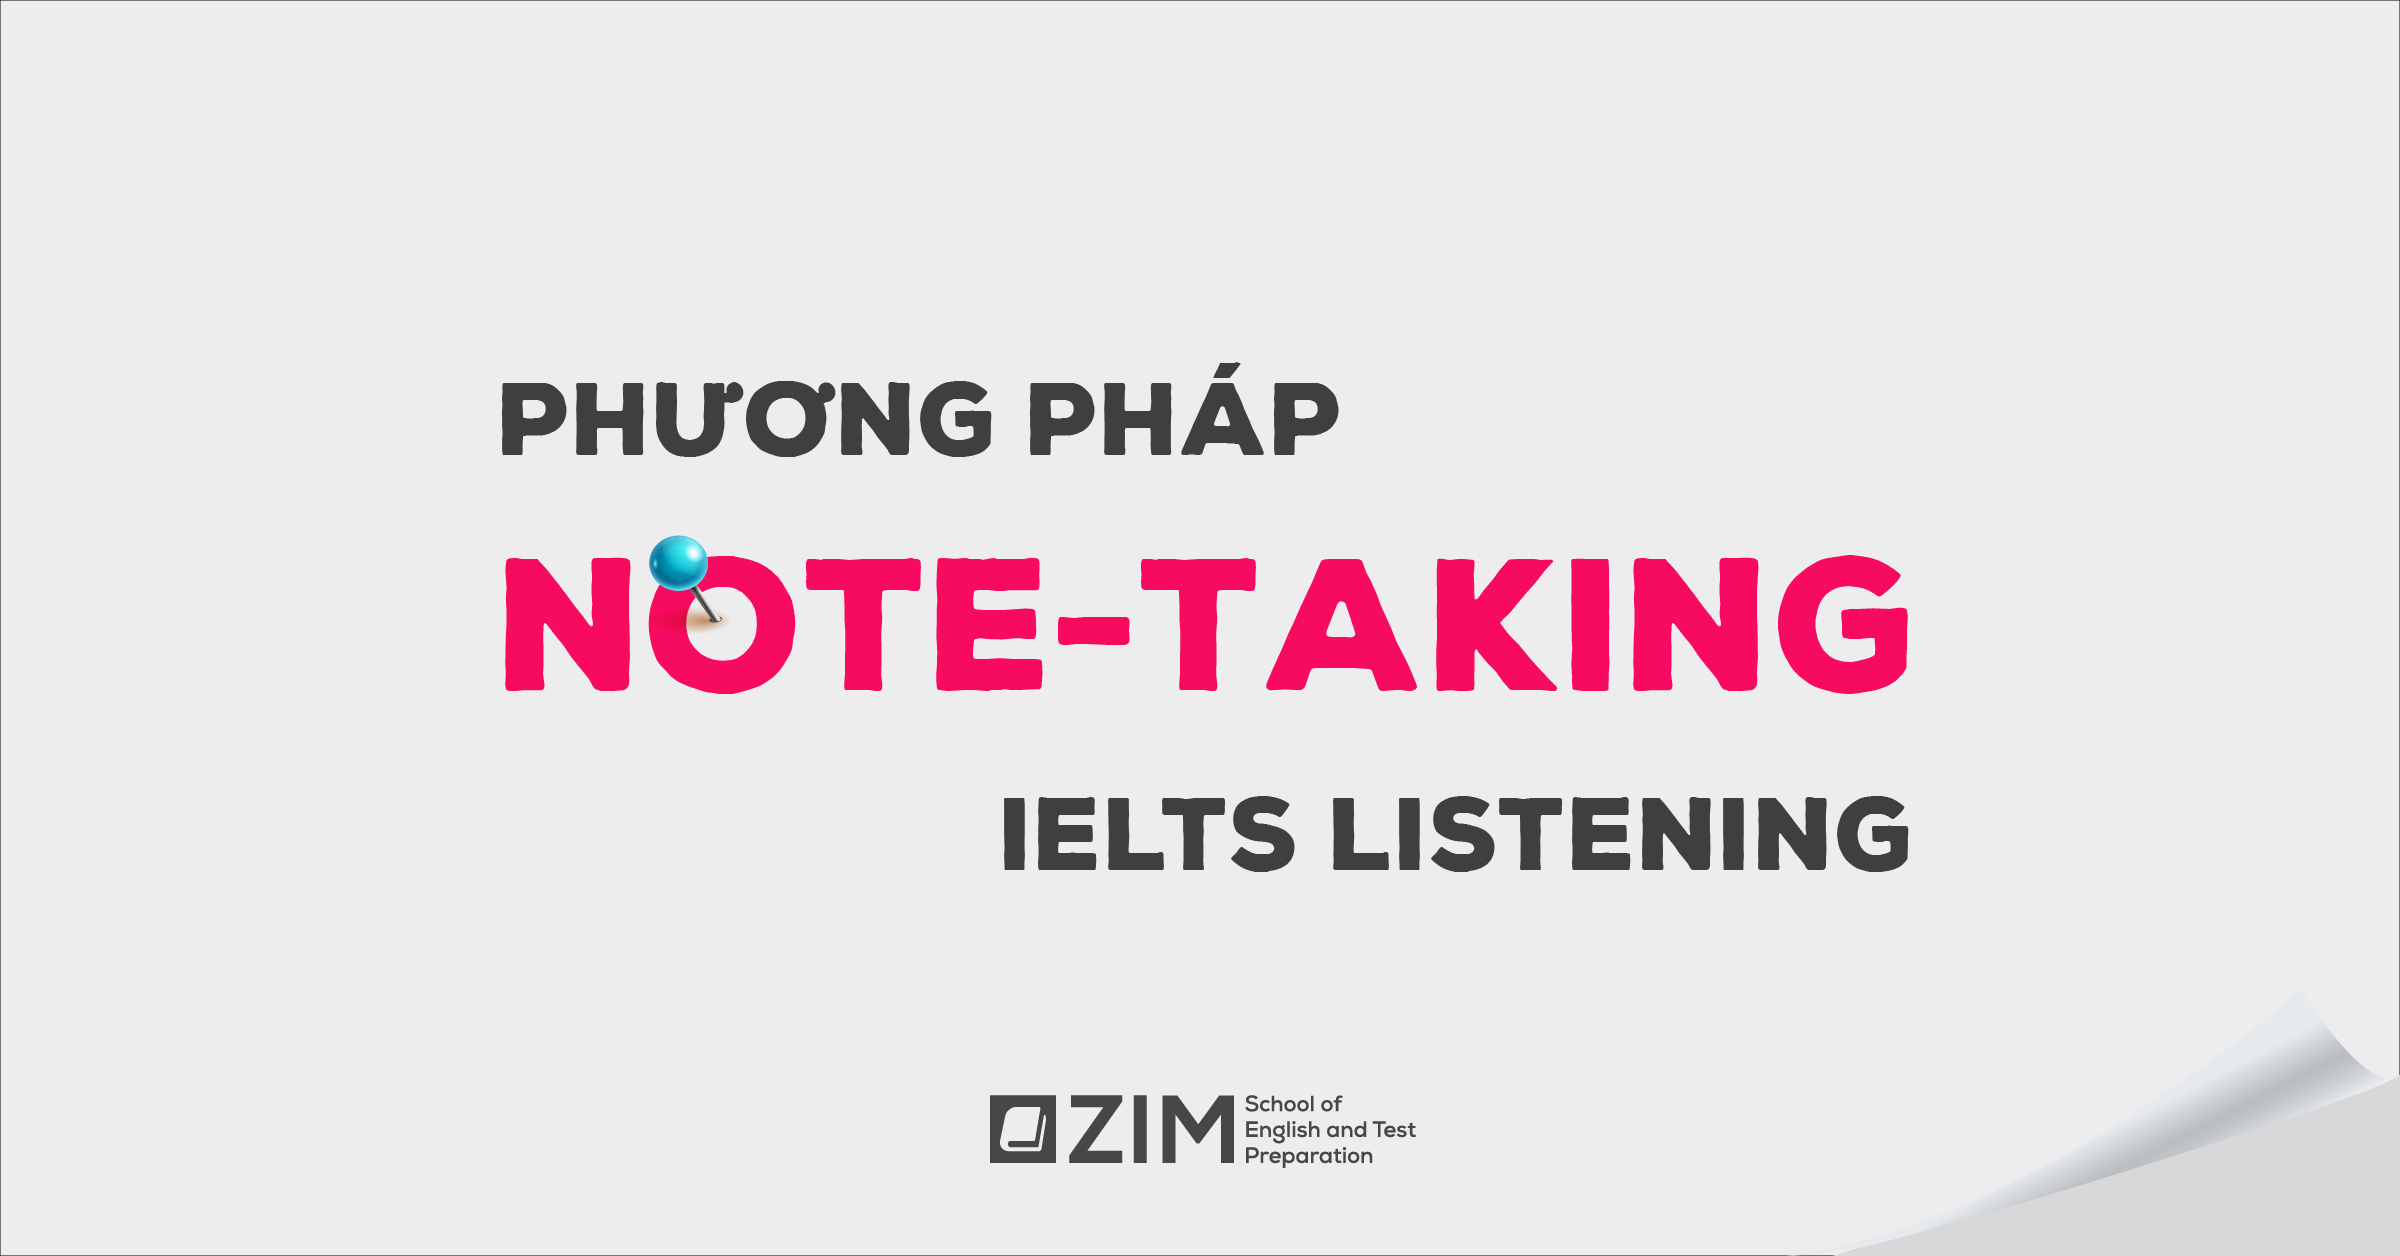 phuong-phap-note-taking-la-gi-ap-dung-vao-dang-bai-multiple-choice-trong-ielts-listening